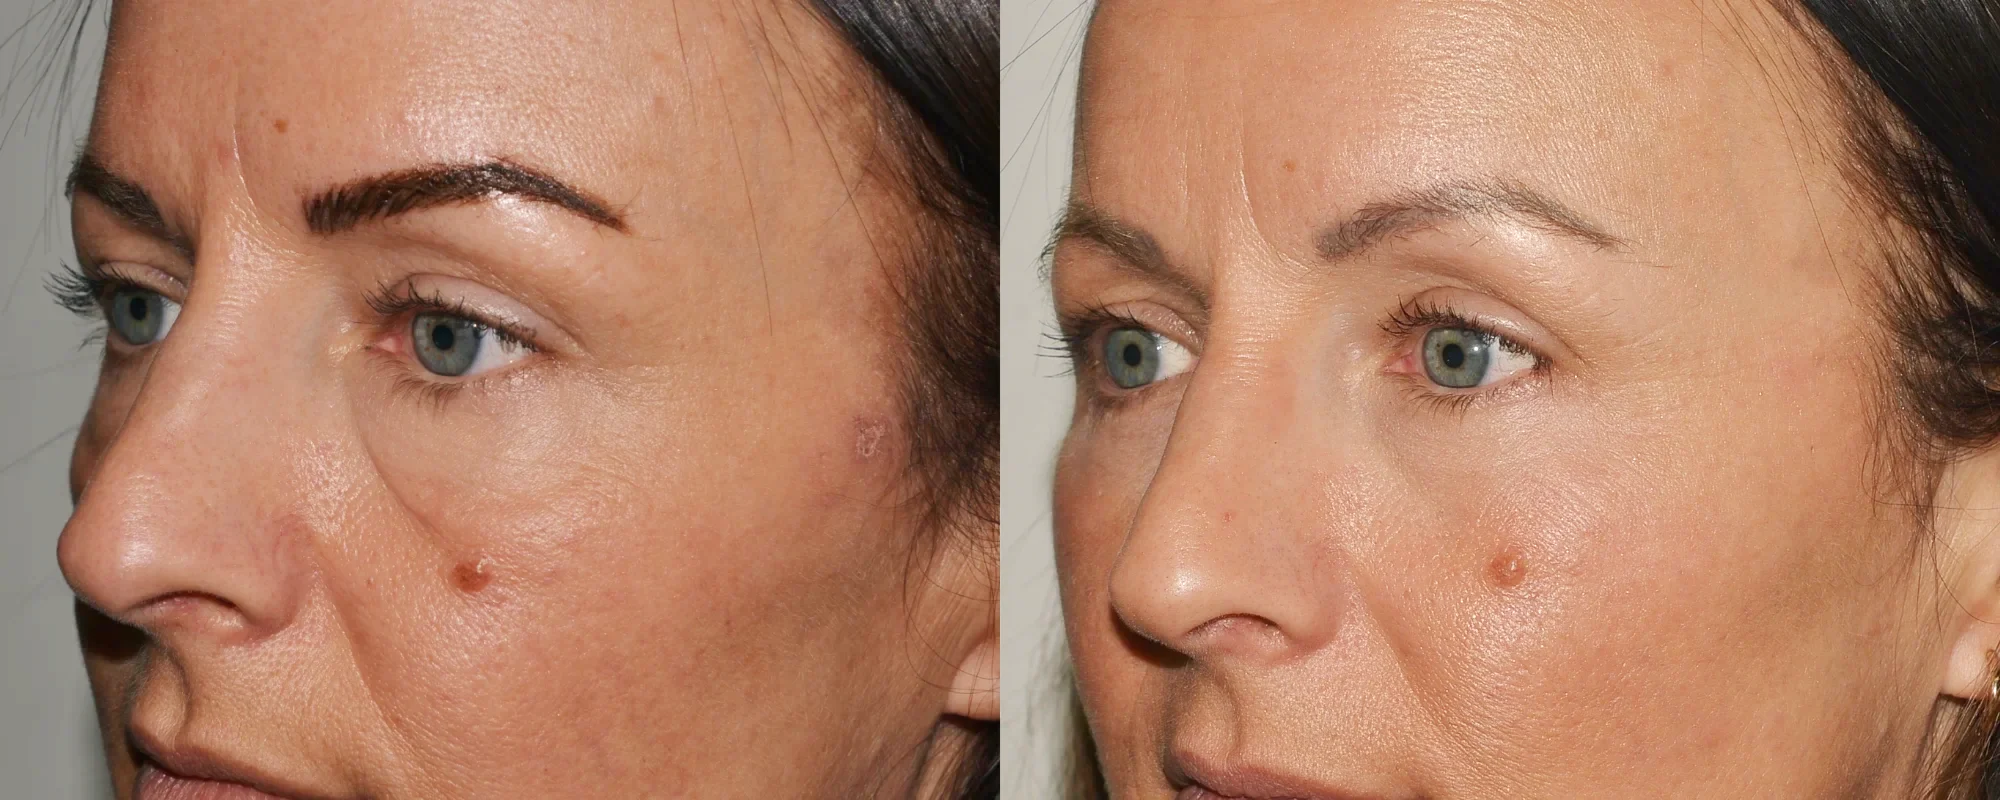 eyebag removal edinburgh before and after